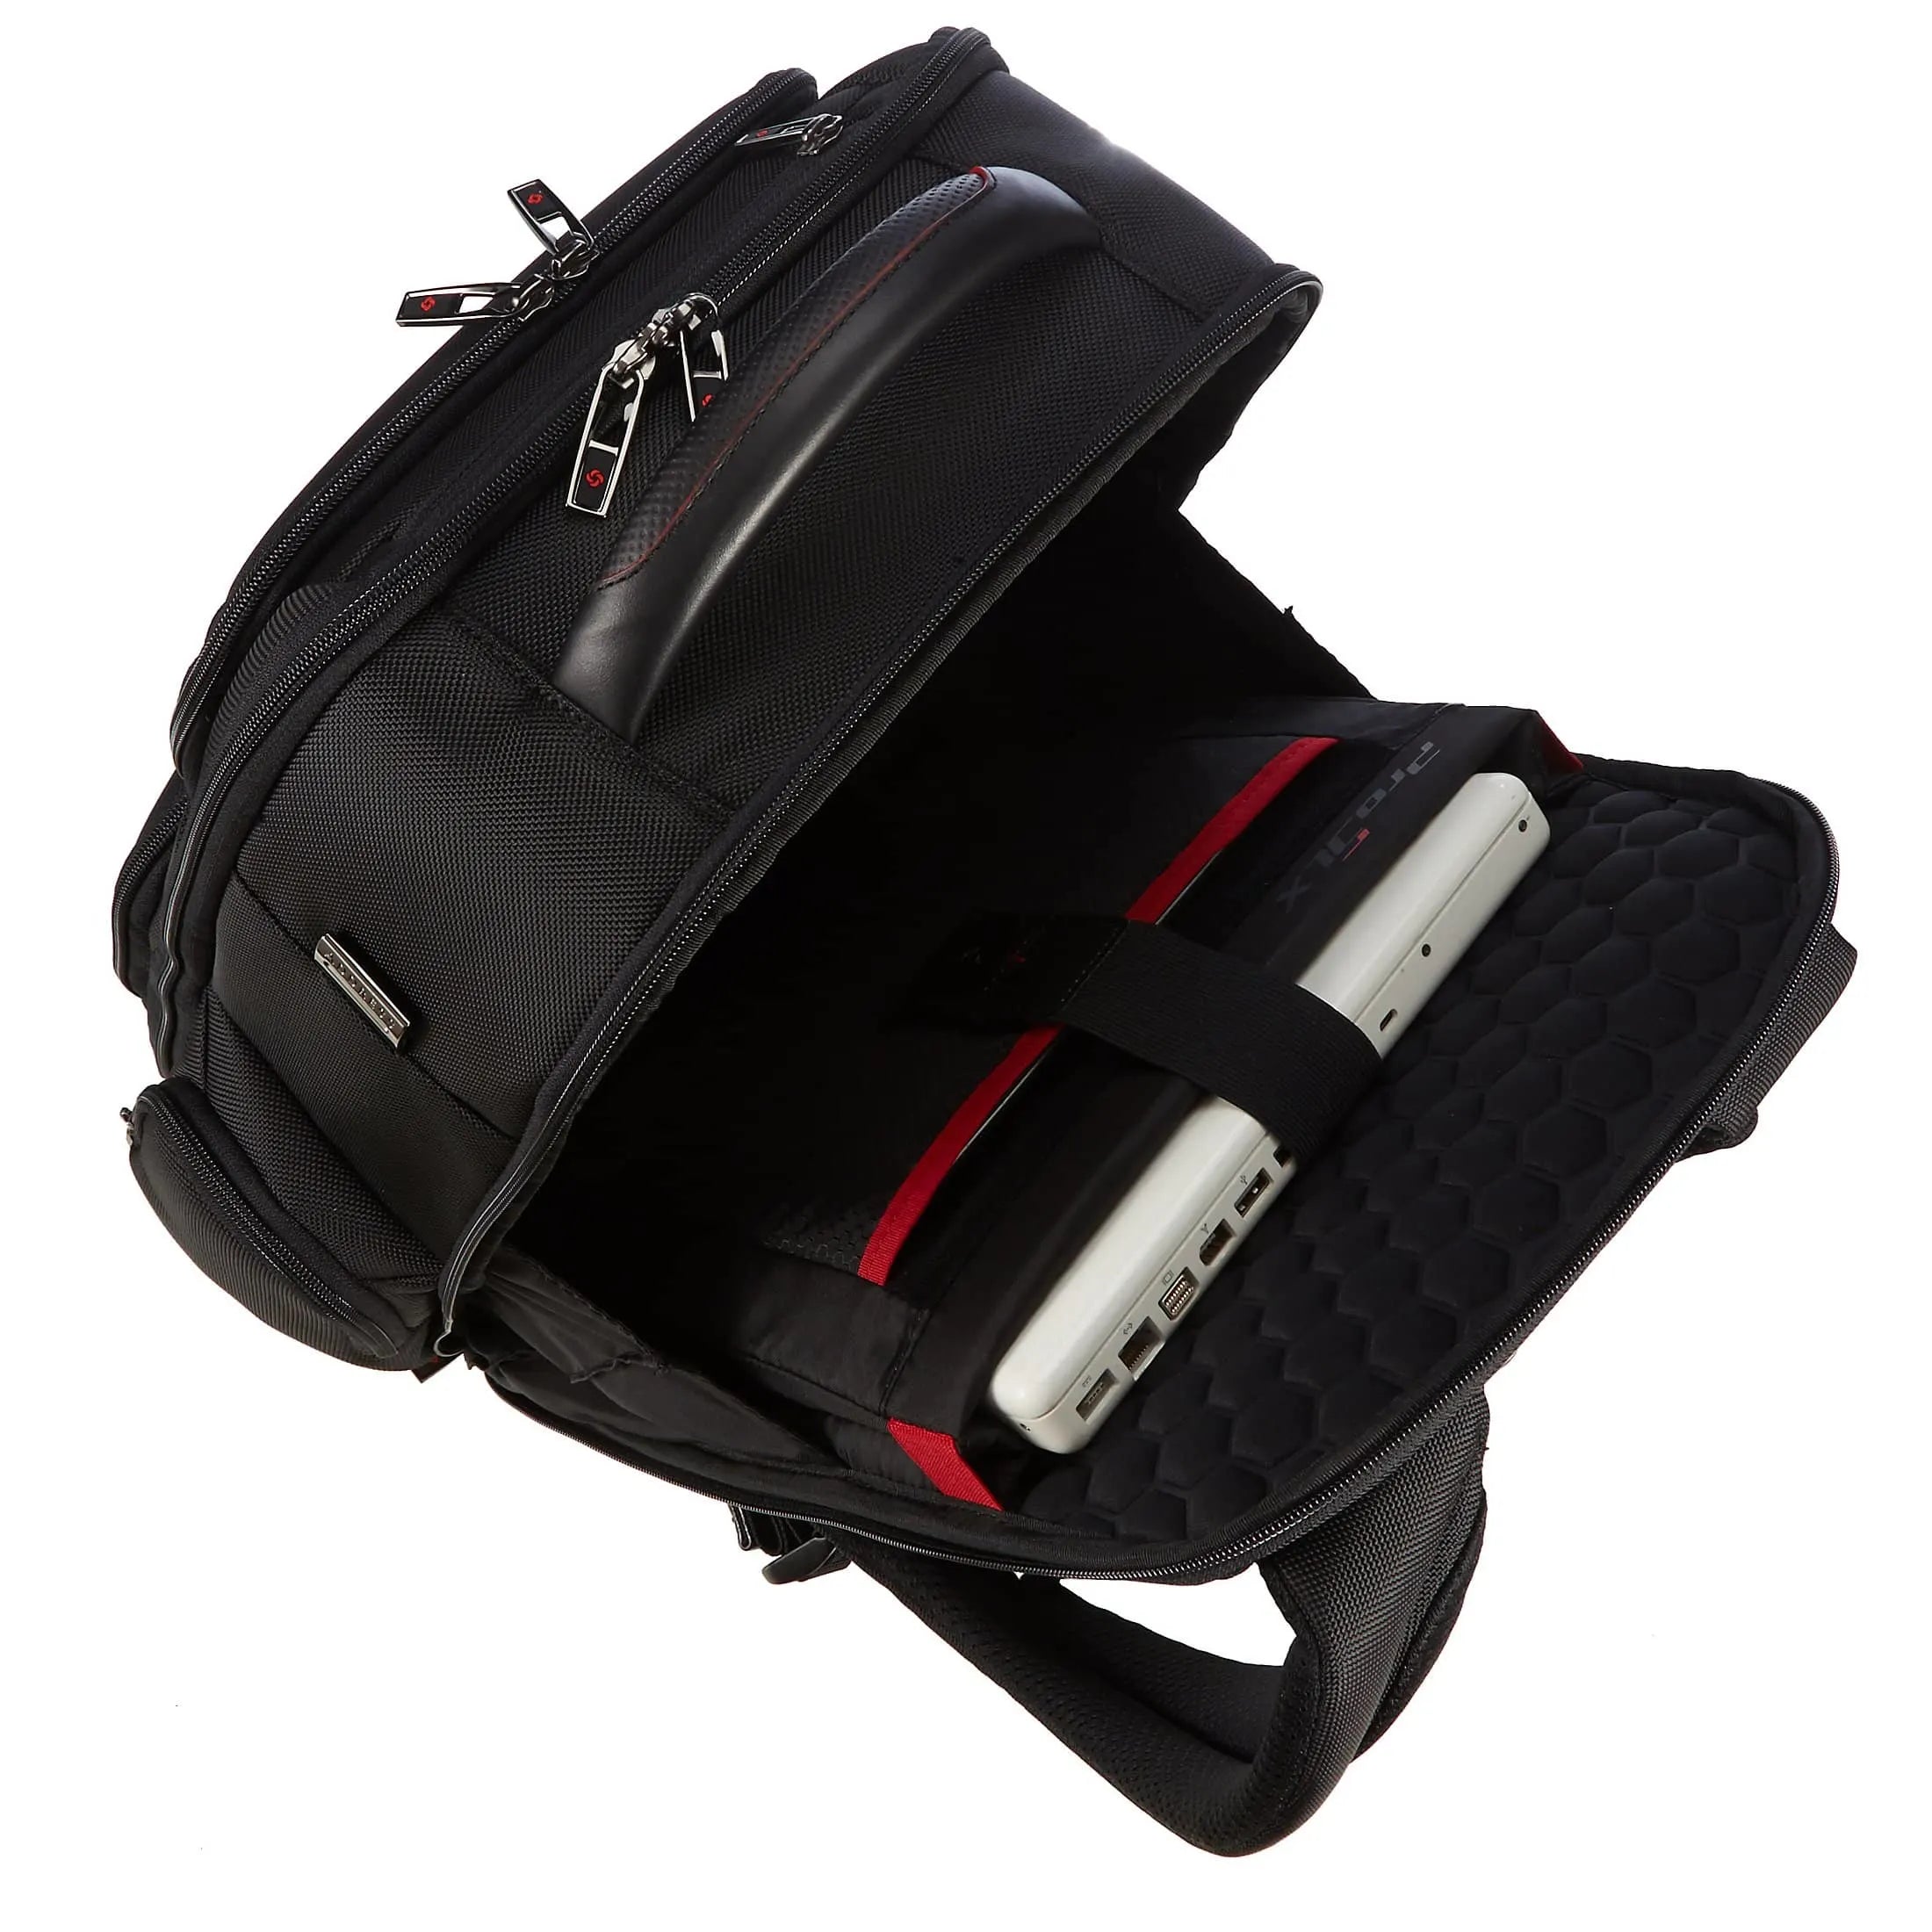 Samsonite Pro-DLX 5 Laptop Backpack 3V 48 cm - black